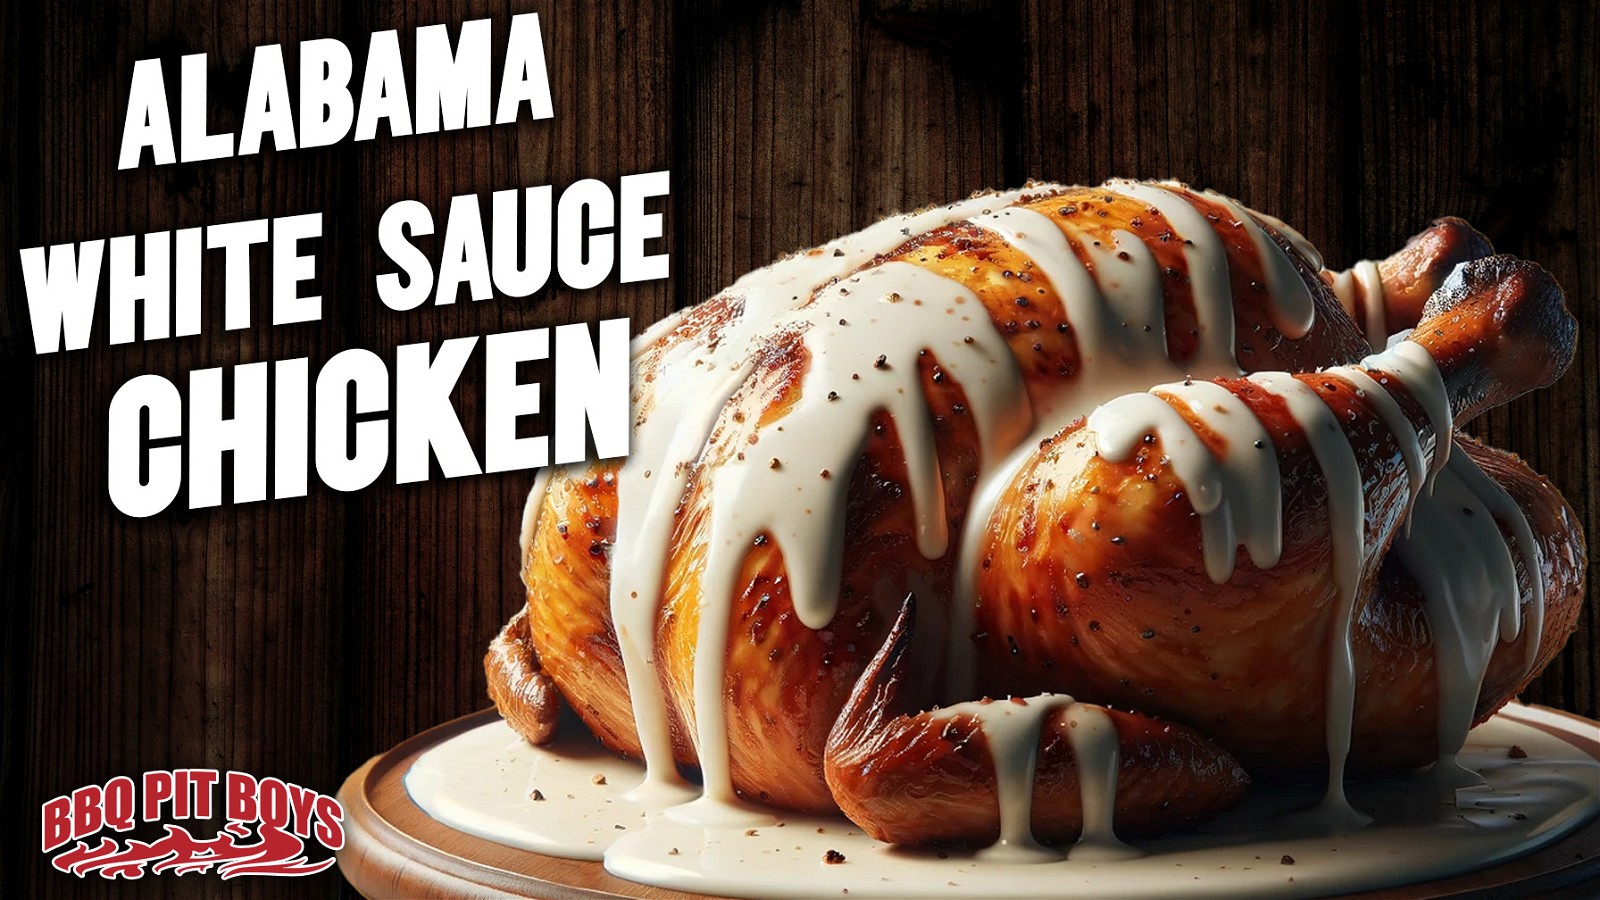 Image of Alabama White Sauce Chicken